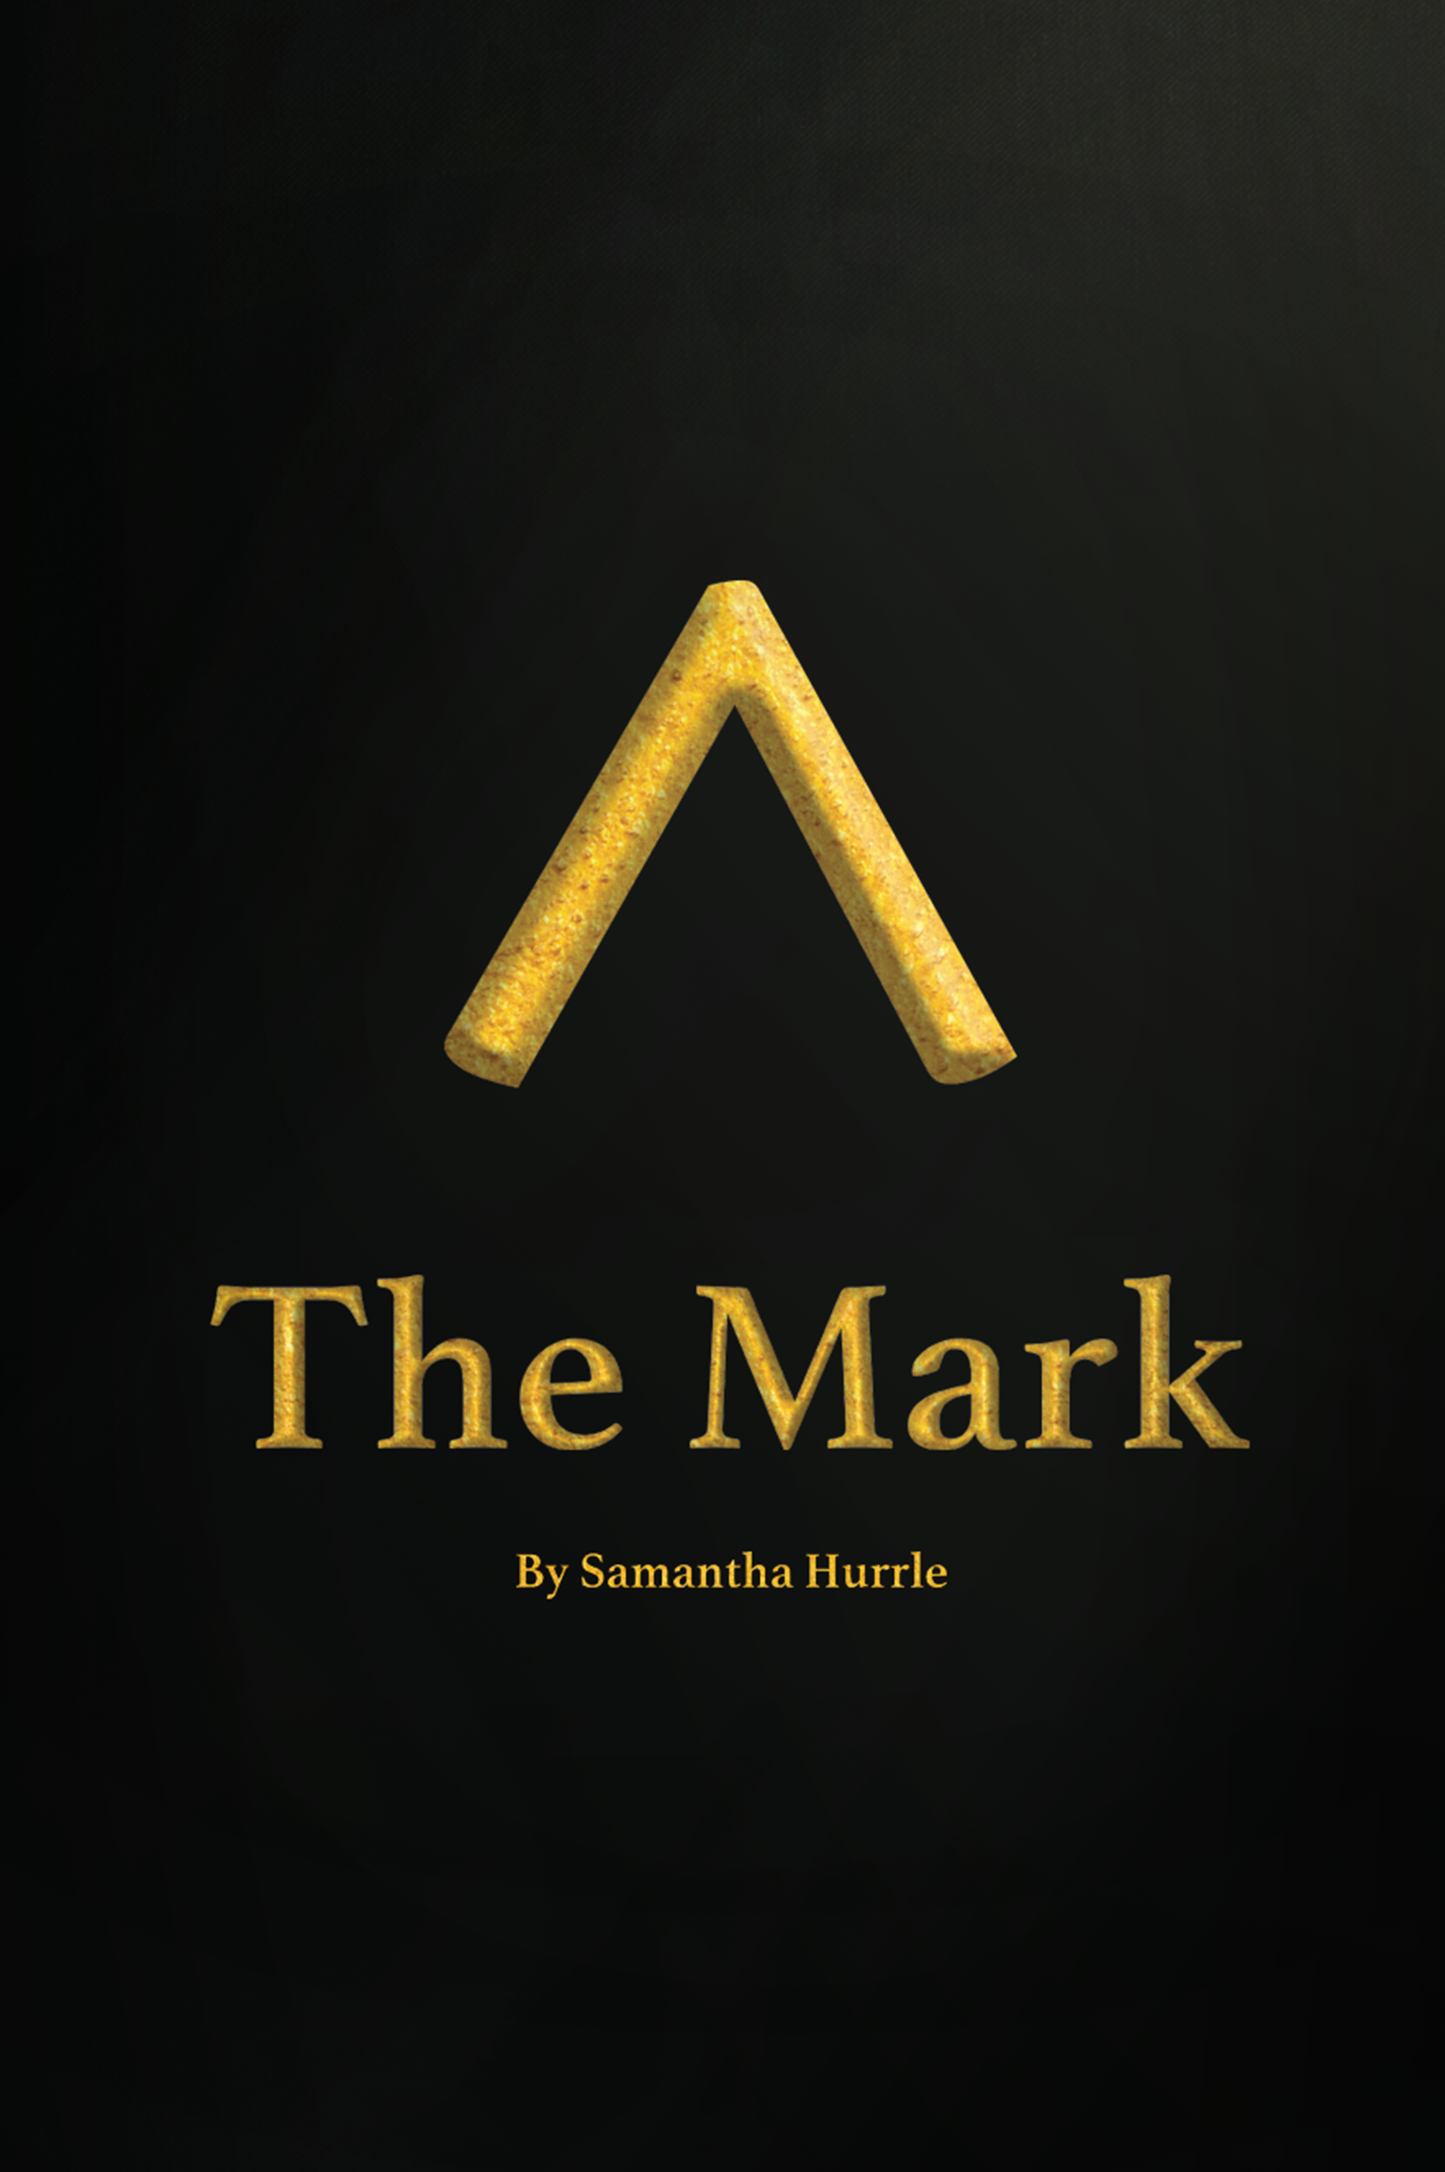 The Mark novel – Signed paperback